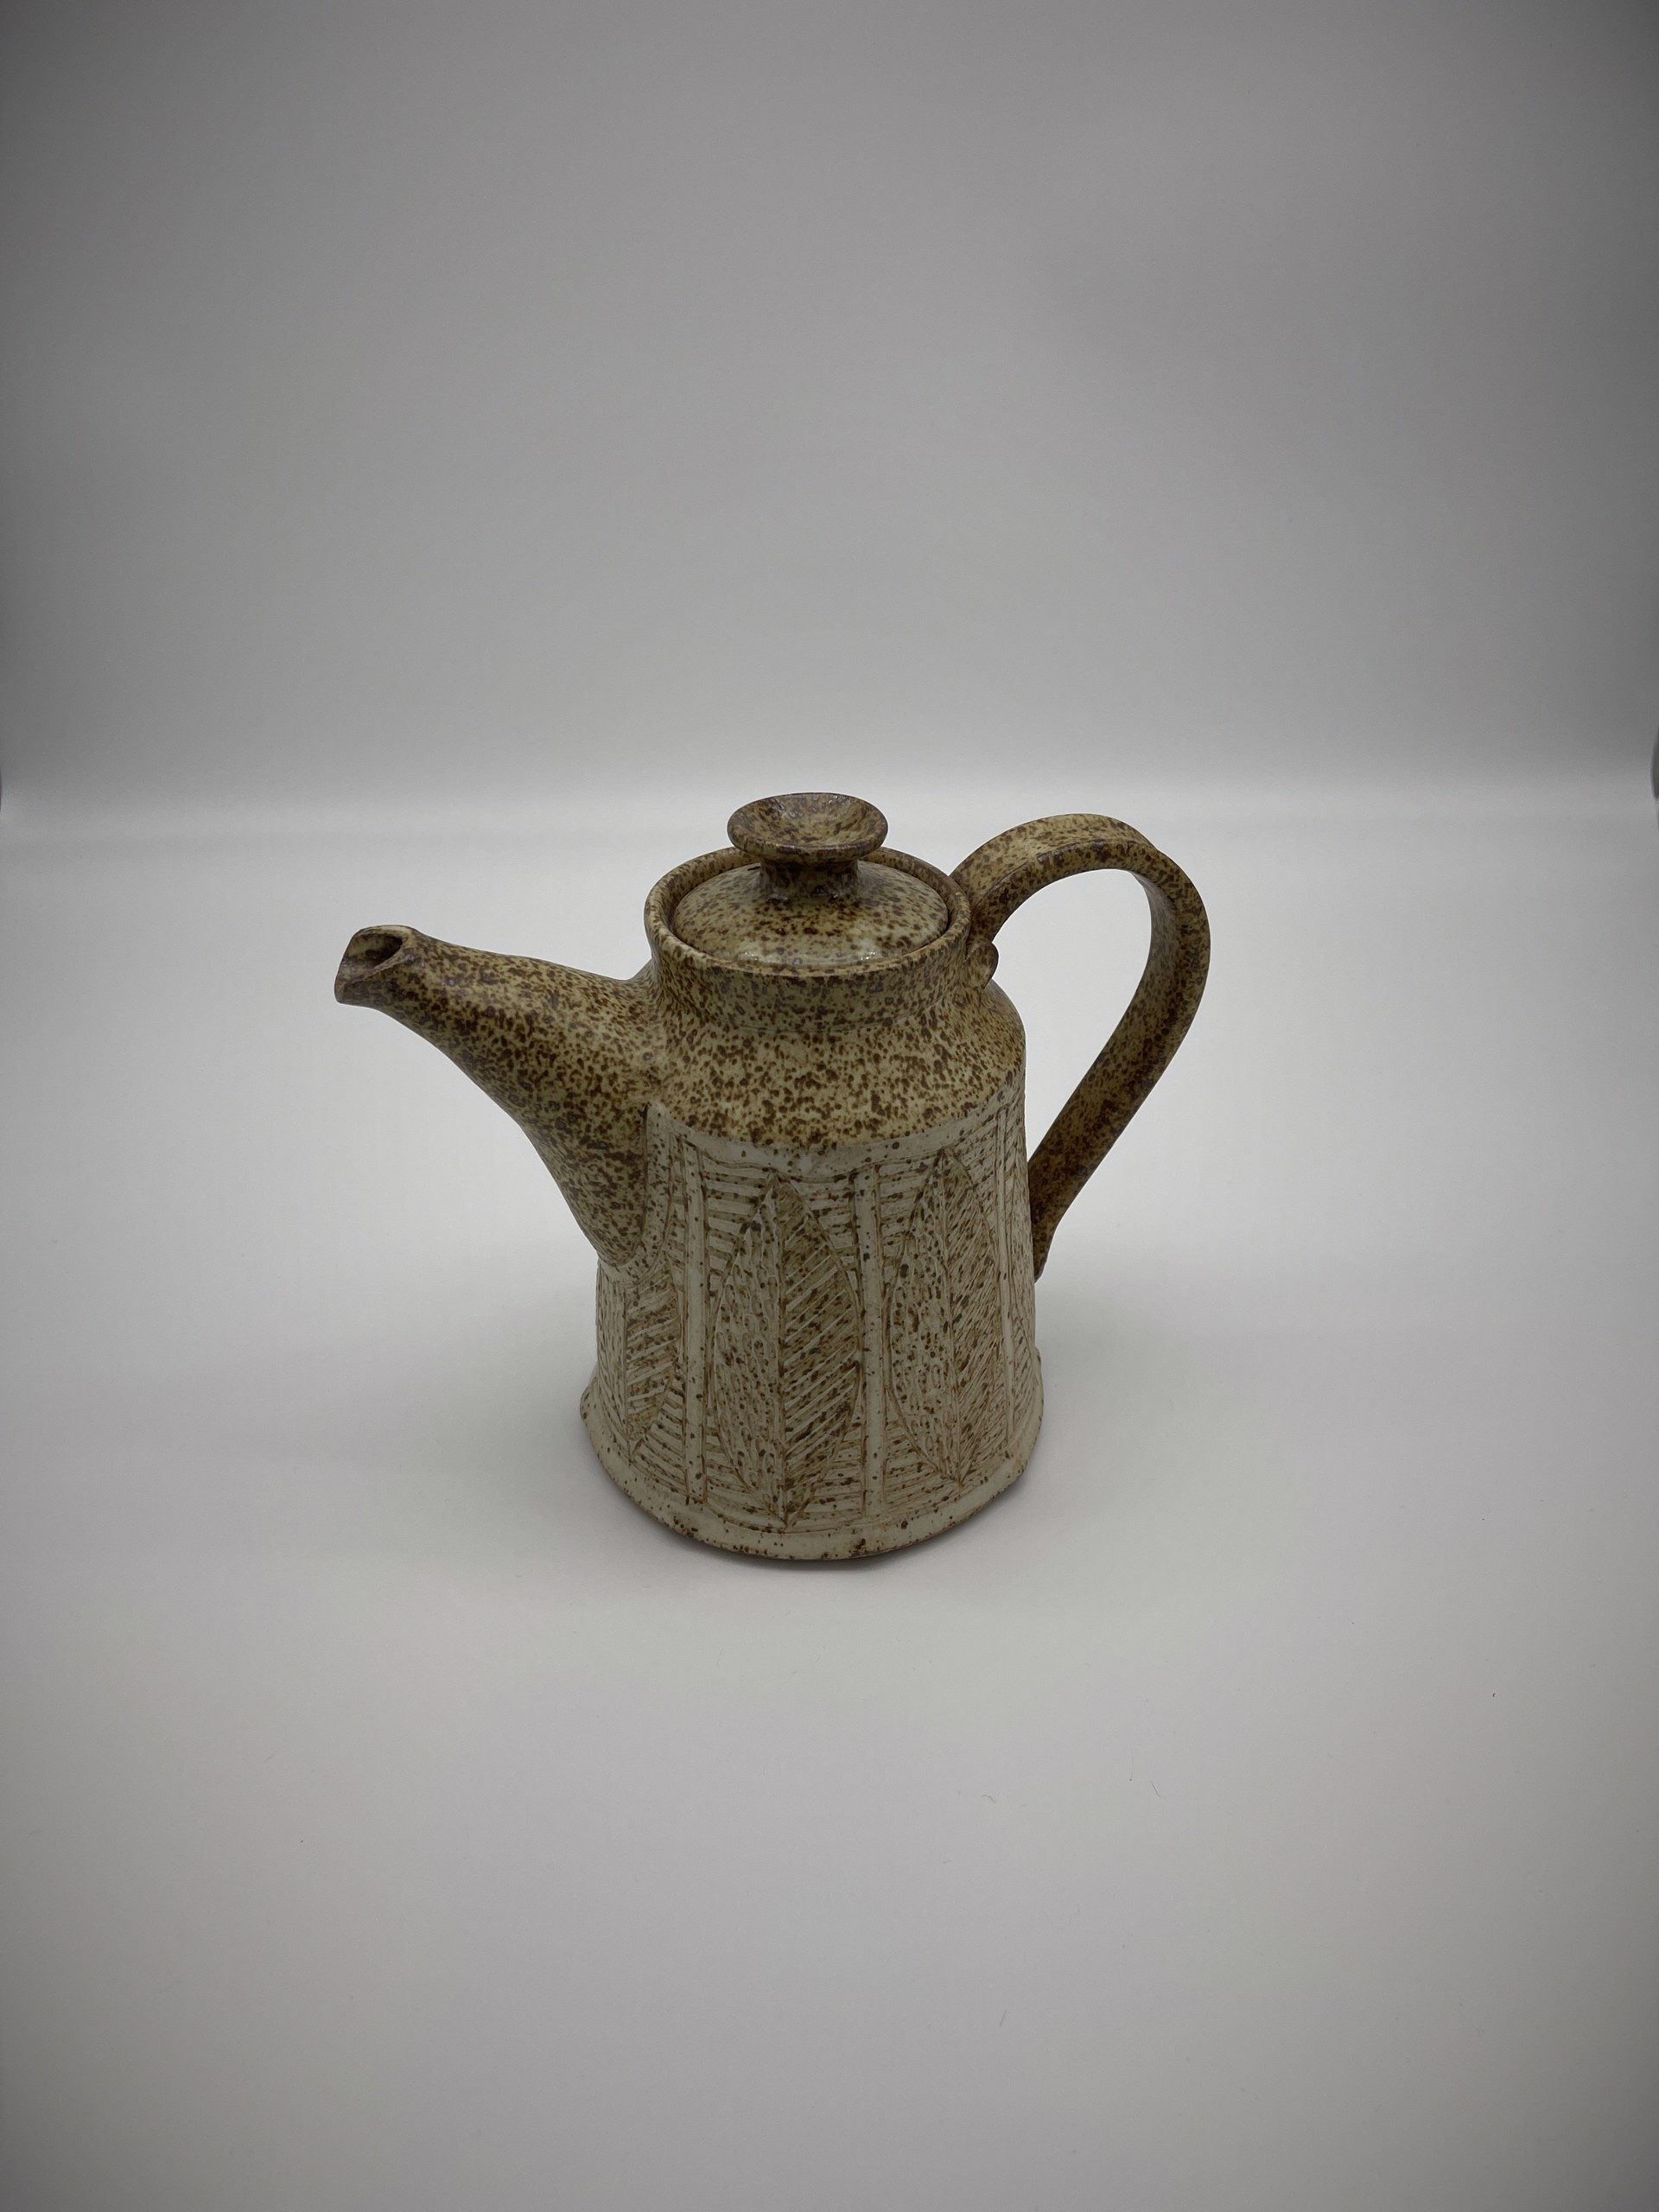 Tea Pot by Karen Heathman